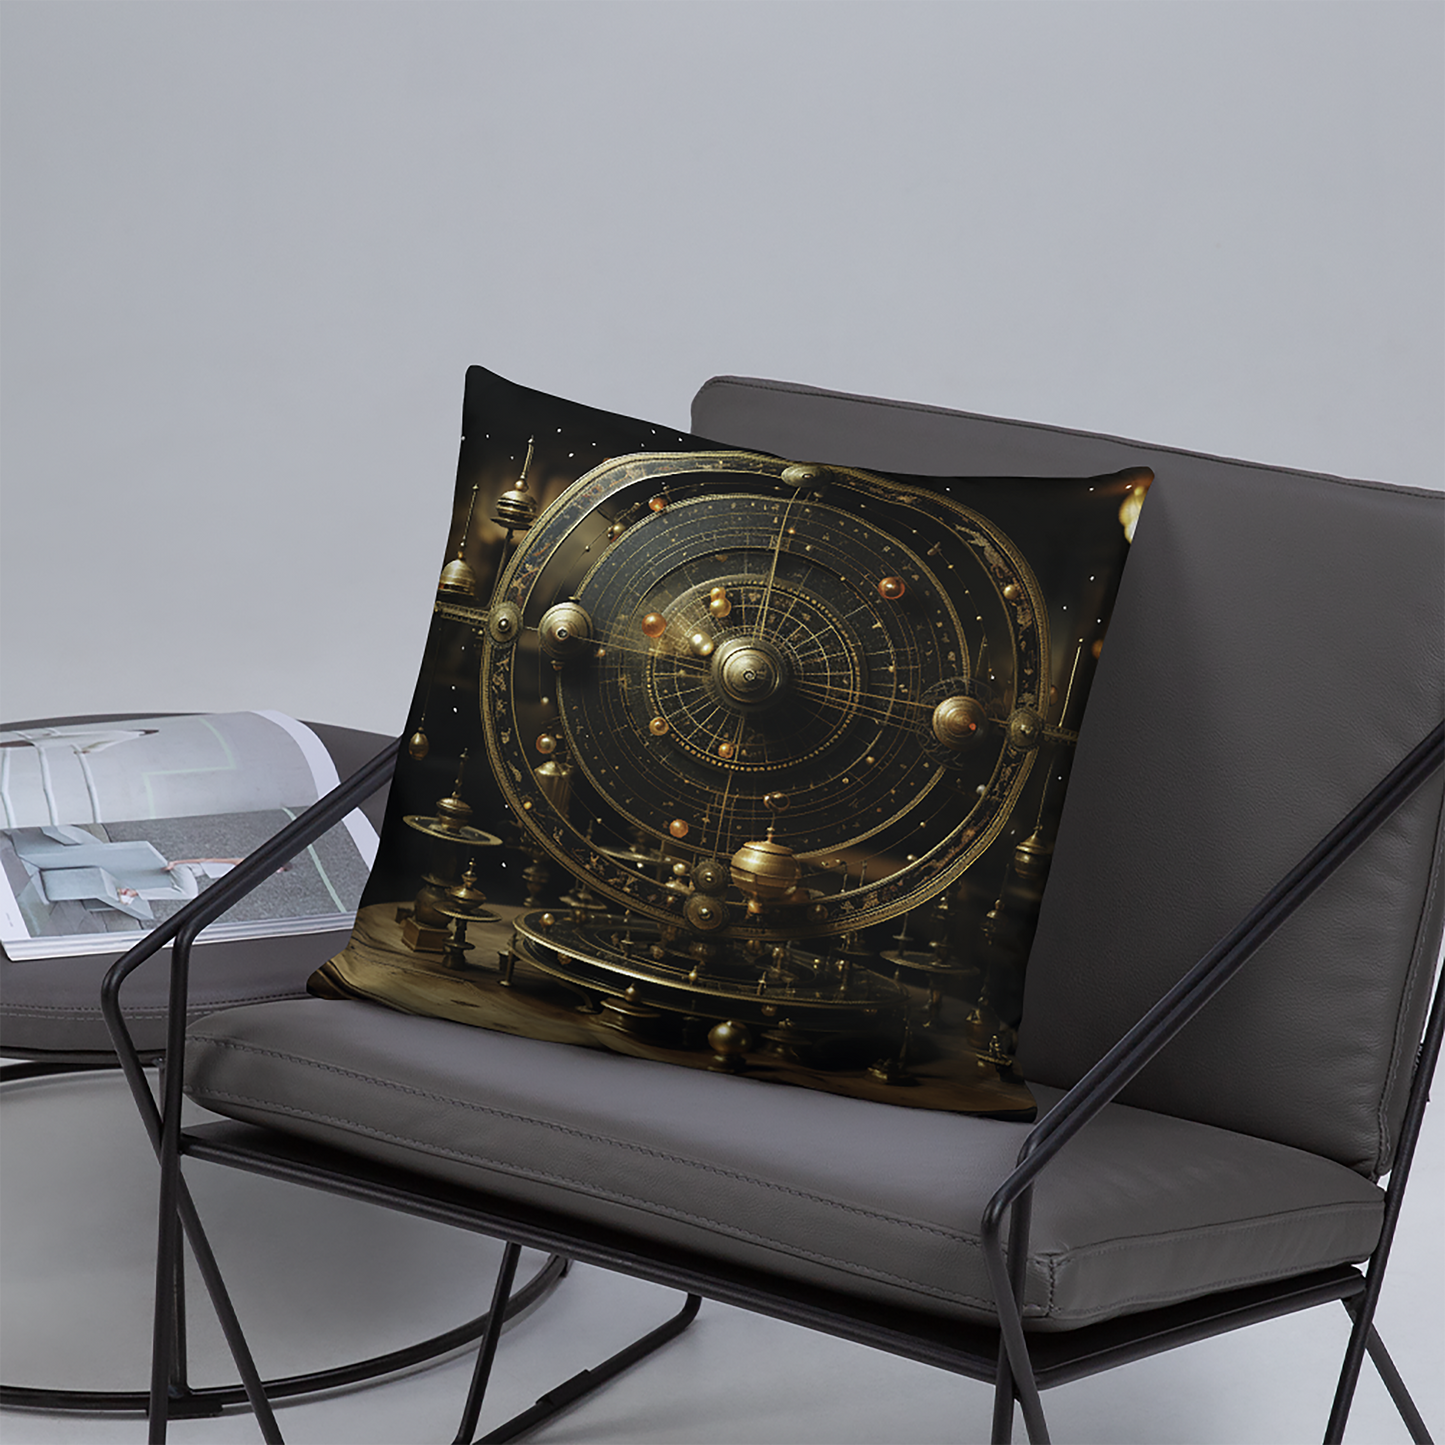 Space Throw Pillow Antique Sun Wheel Futuristic Polyester Decorative Cushion 18x18